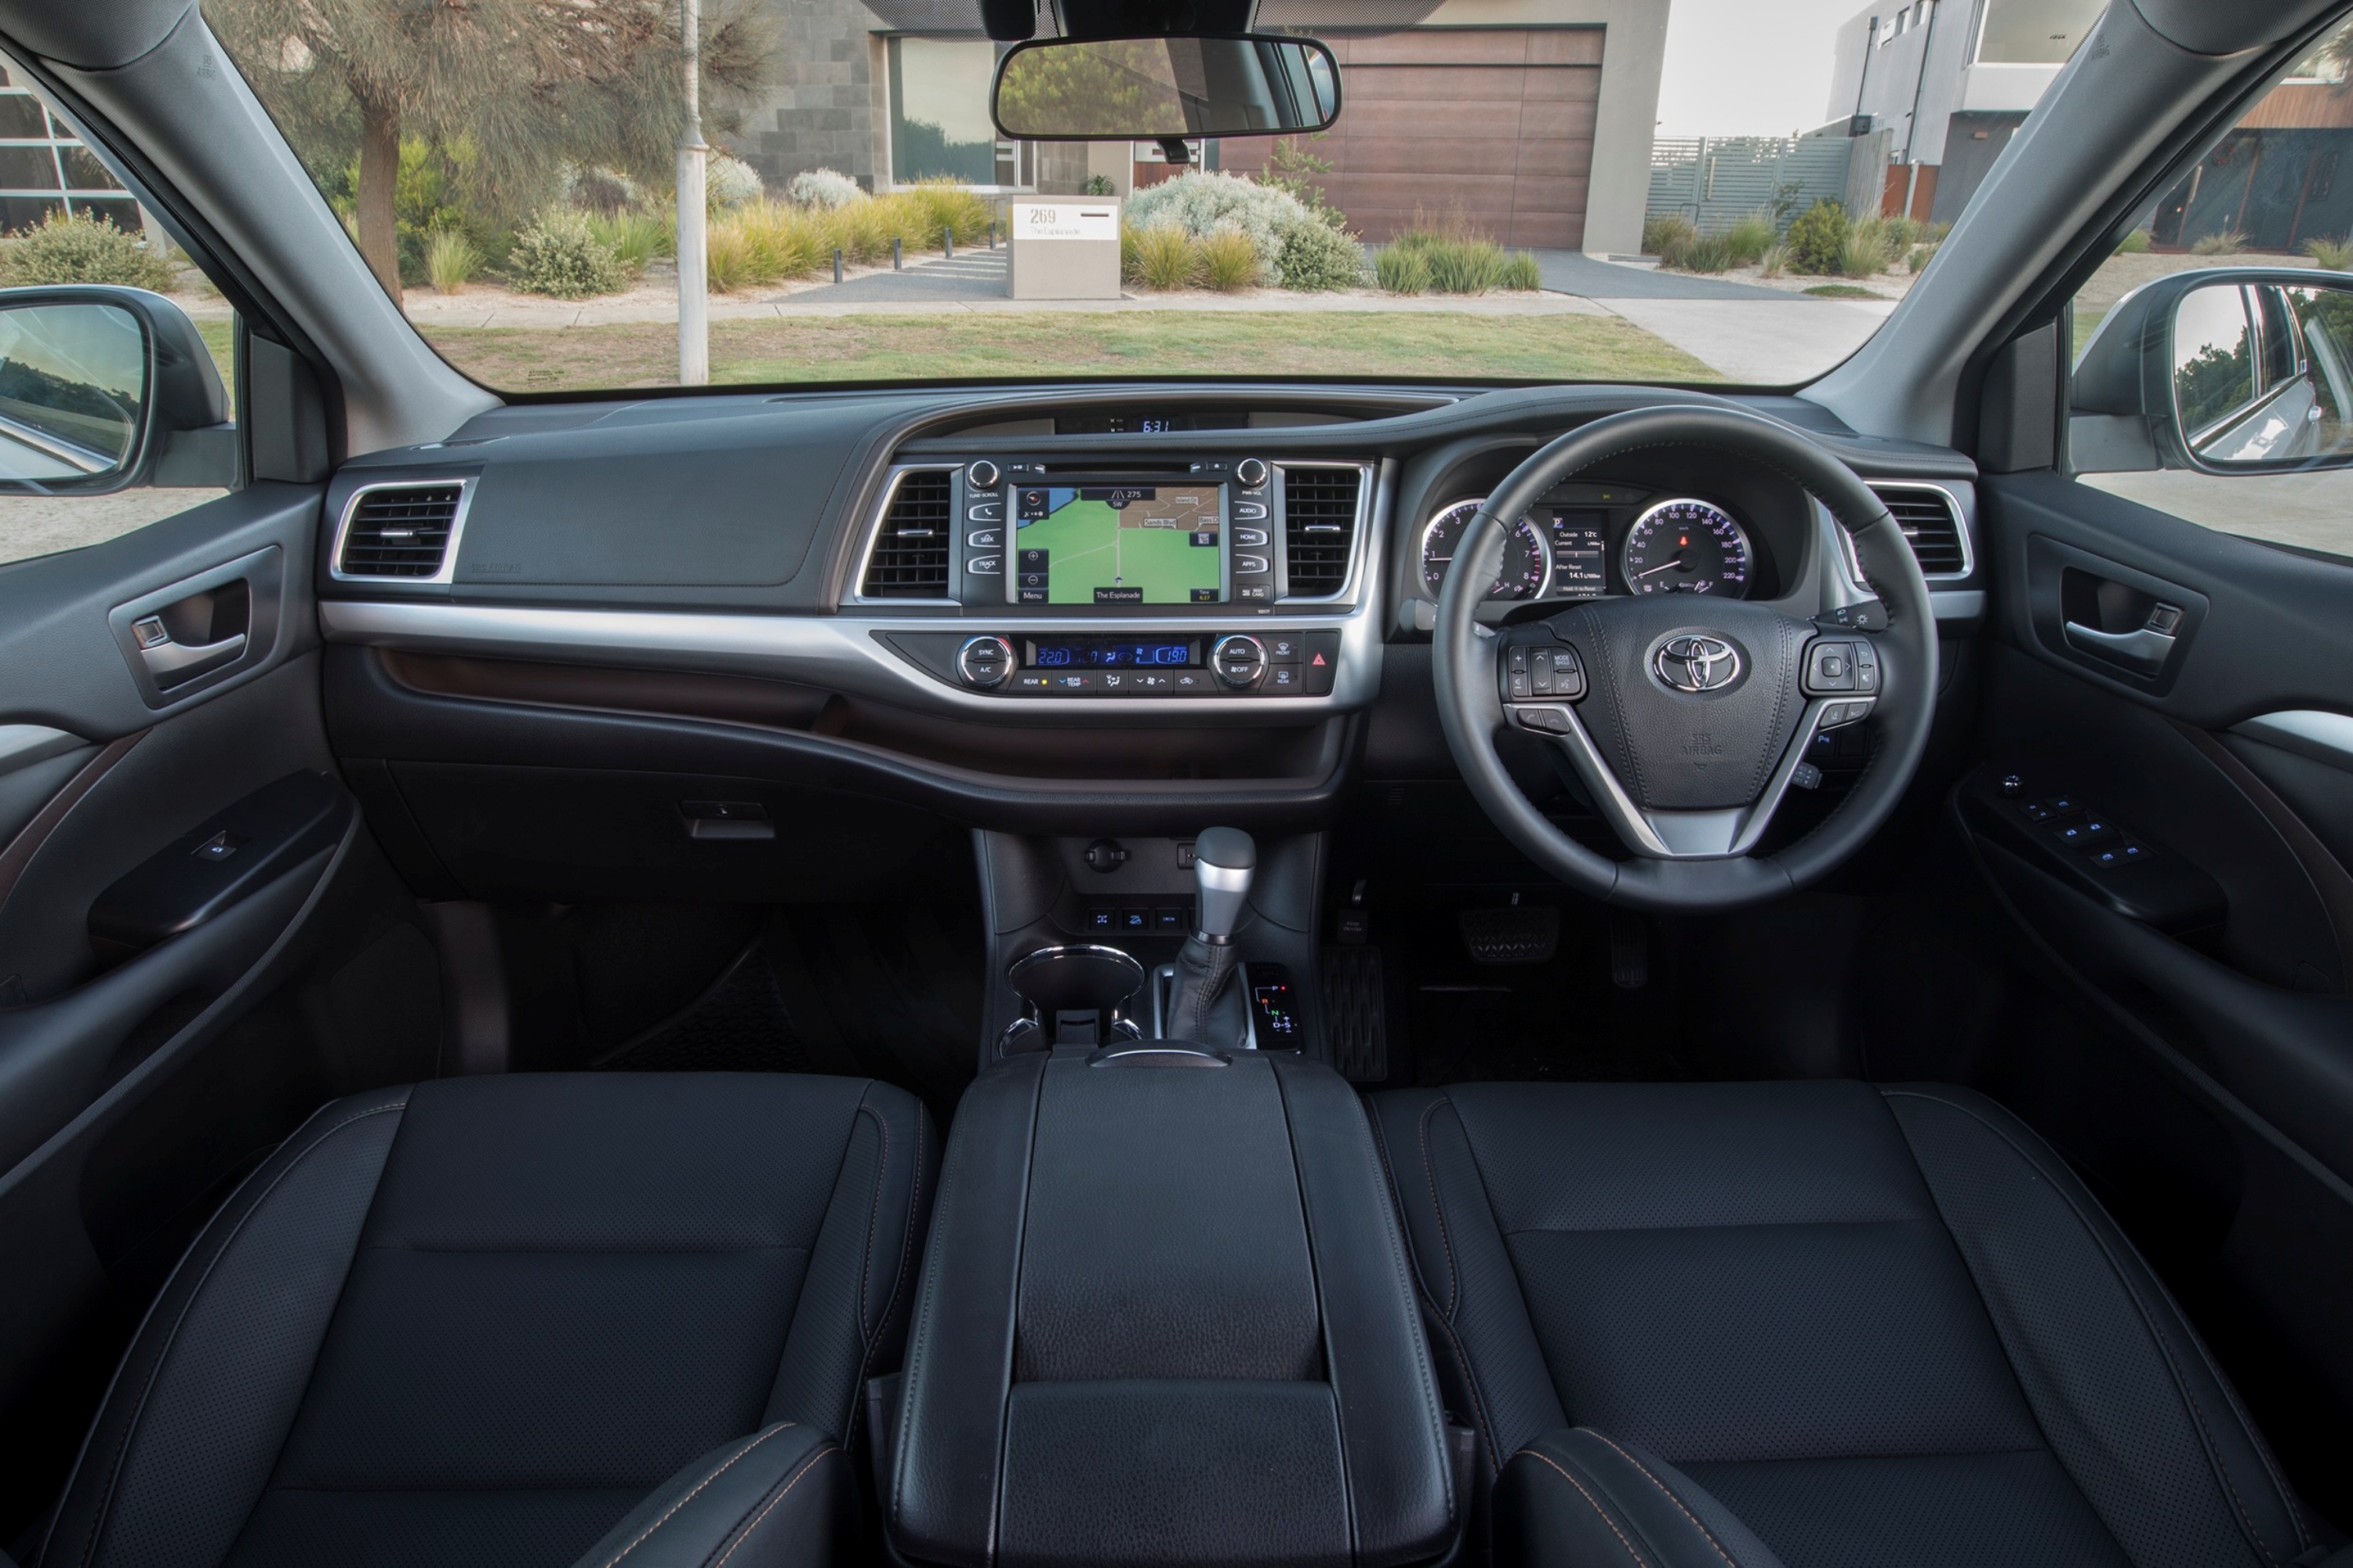 2019 Toyota Kluger Black Edition interior